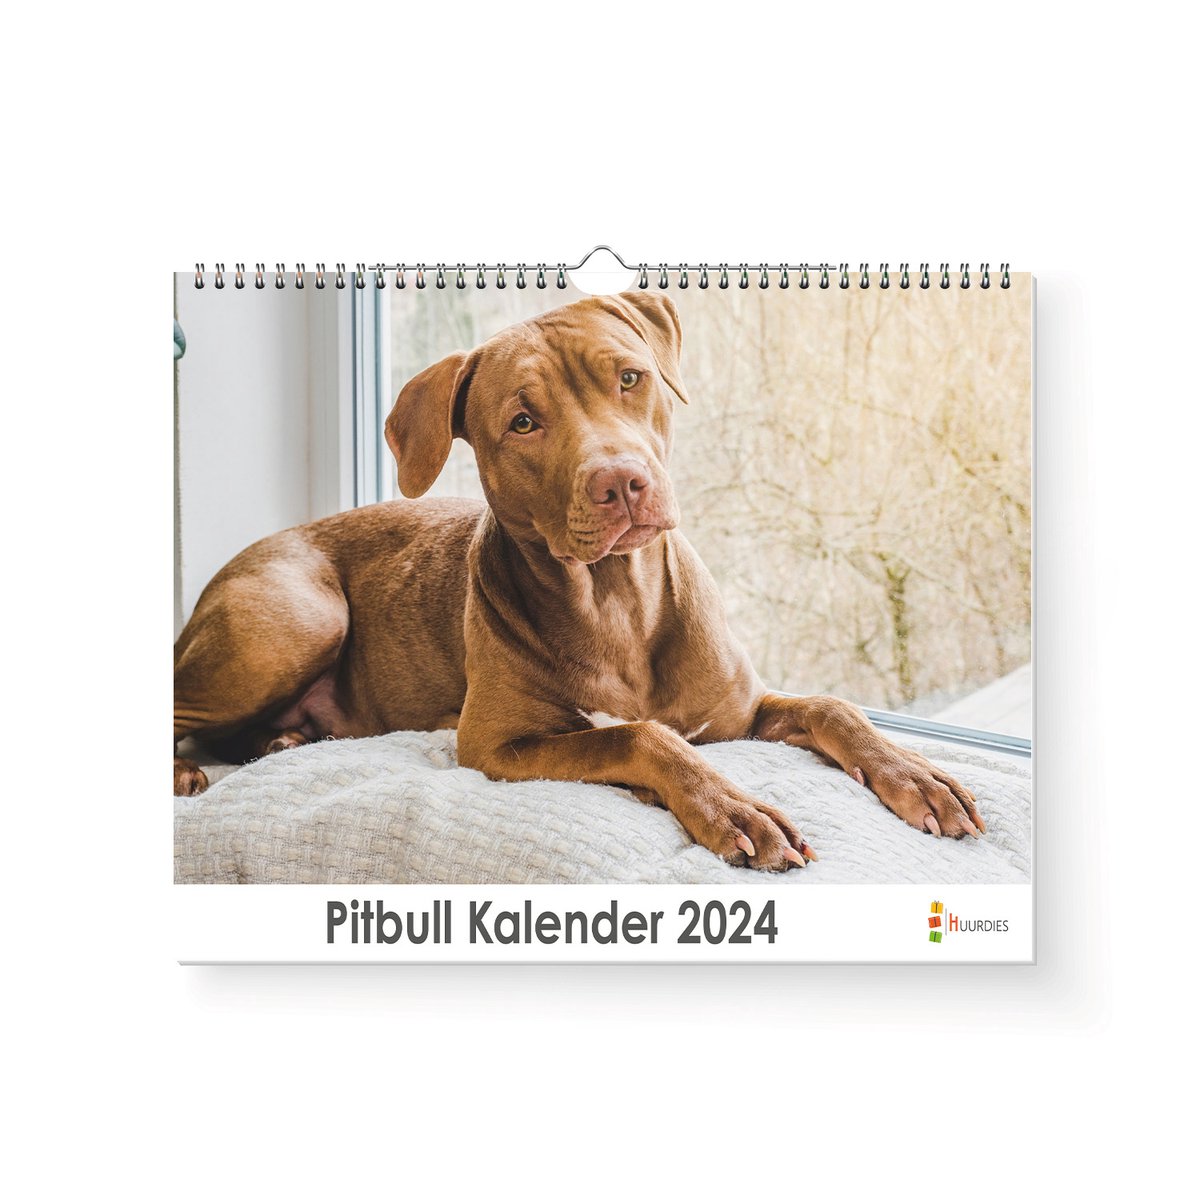 Huurdies - Pitbull Kalender - Jaarkalender 2024 - 35x24 - 300gms